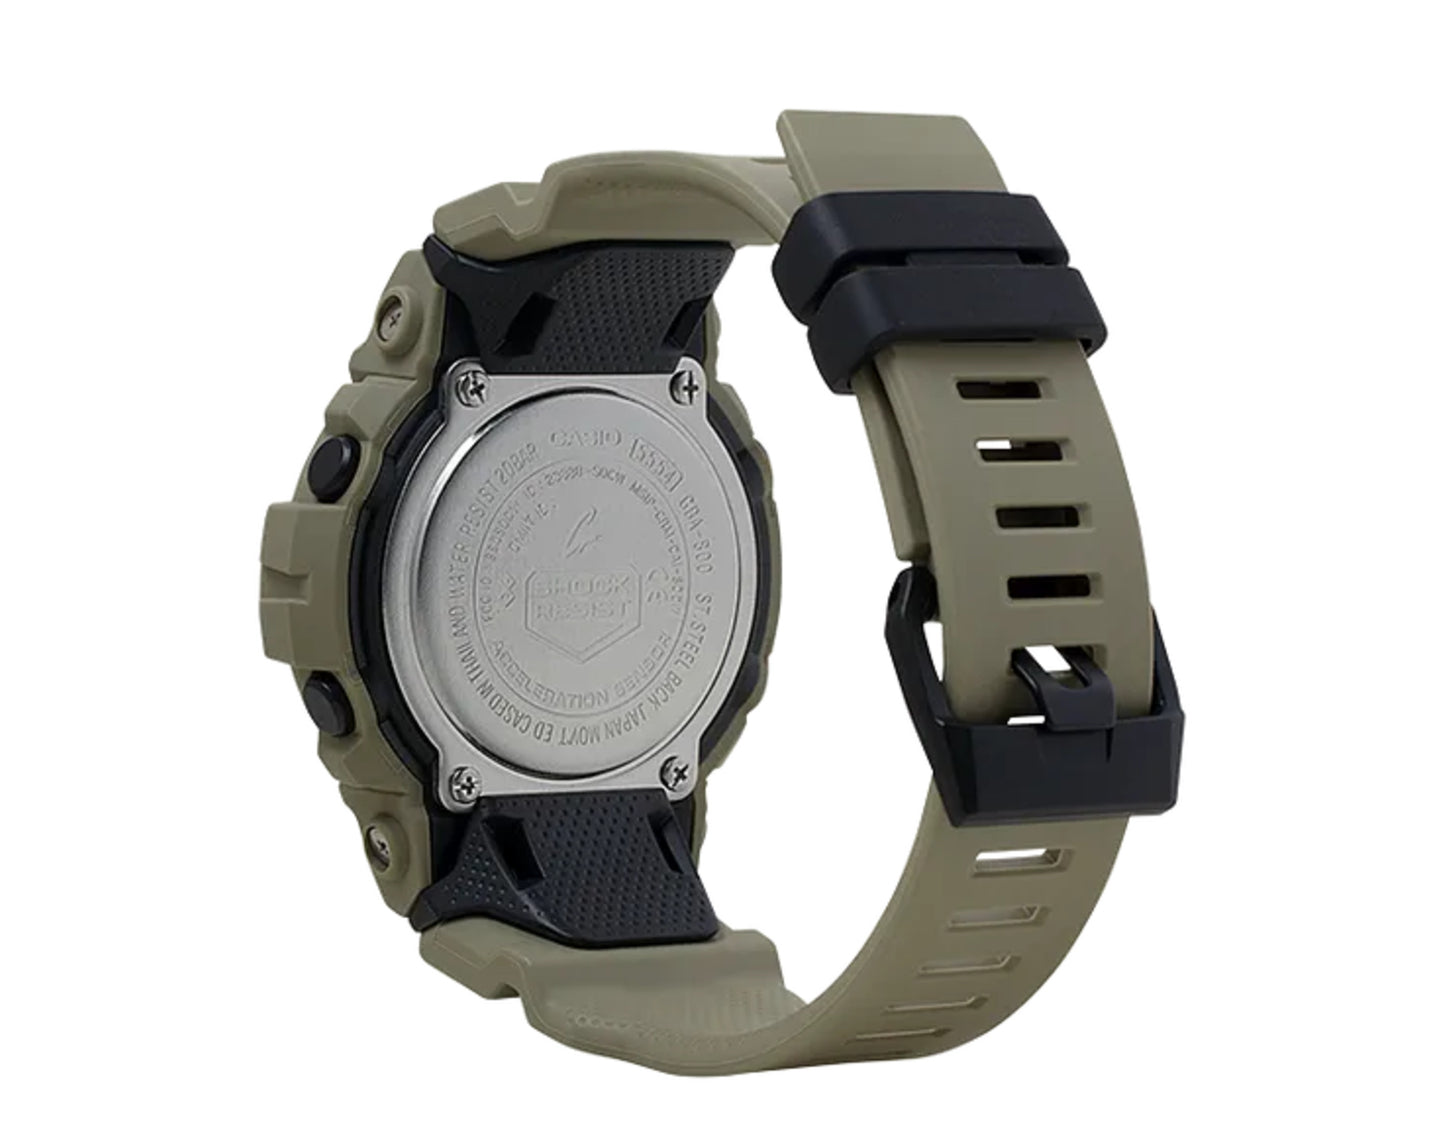 Casio G-Shock Analog-Digital Step Tracker Resin Beige Men's Watch GBA800UC-5A